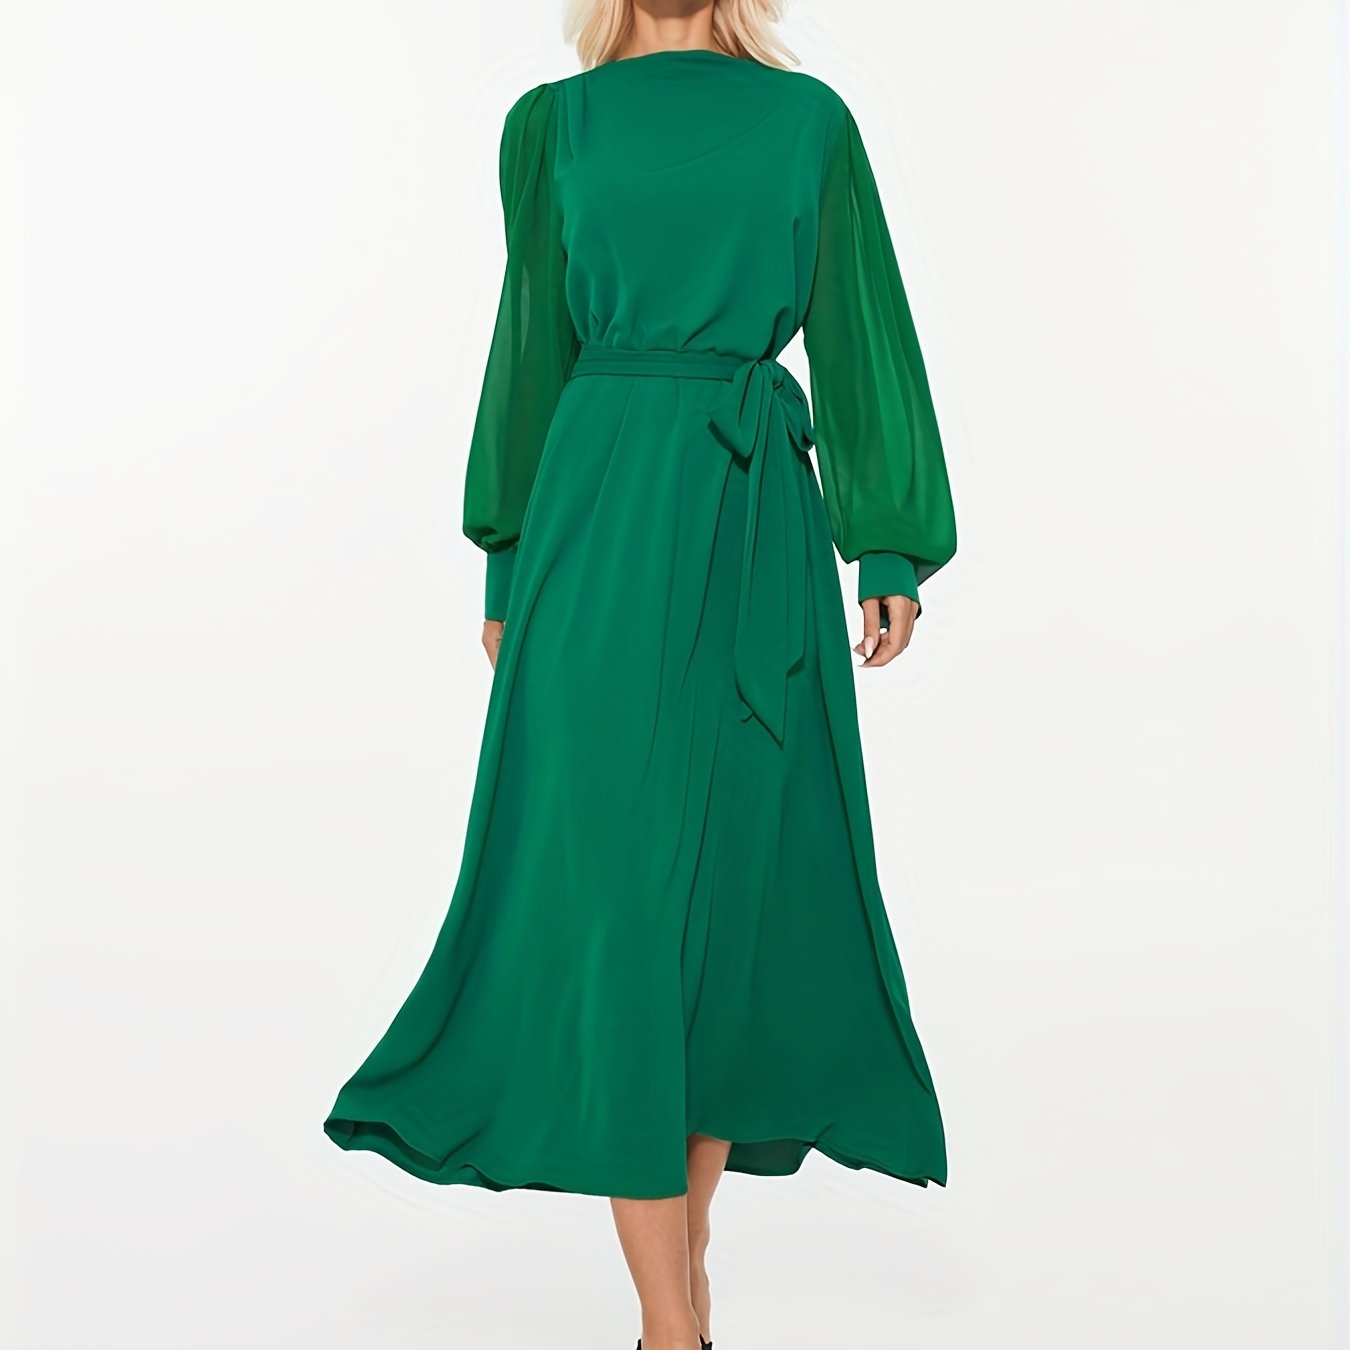 lantern long sleeve simple dress elegant mock neck midi dress womens clothing